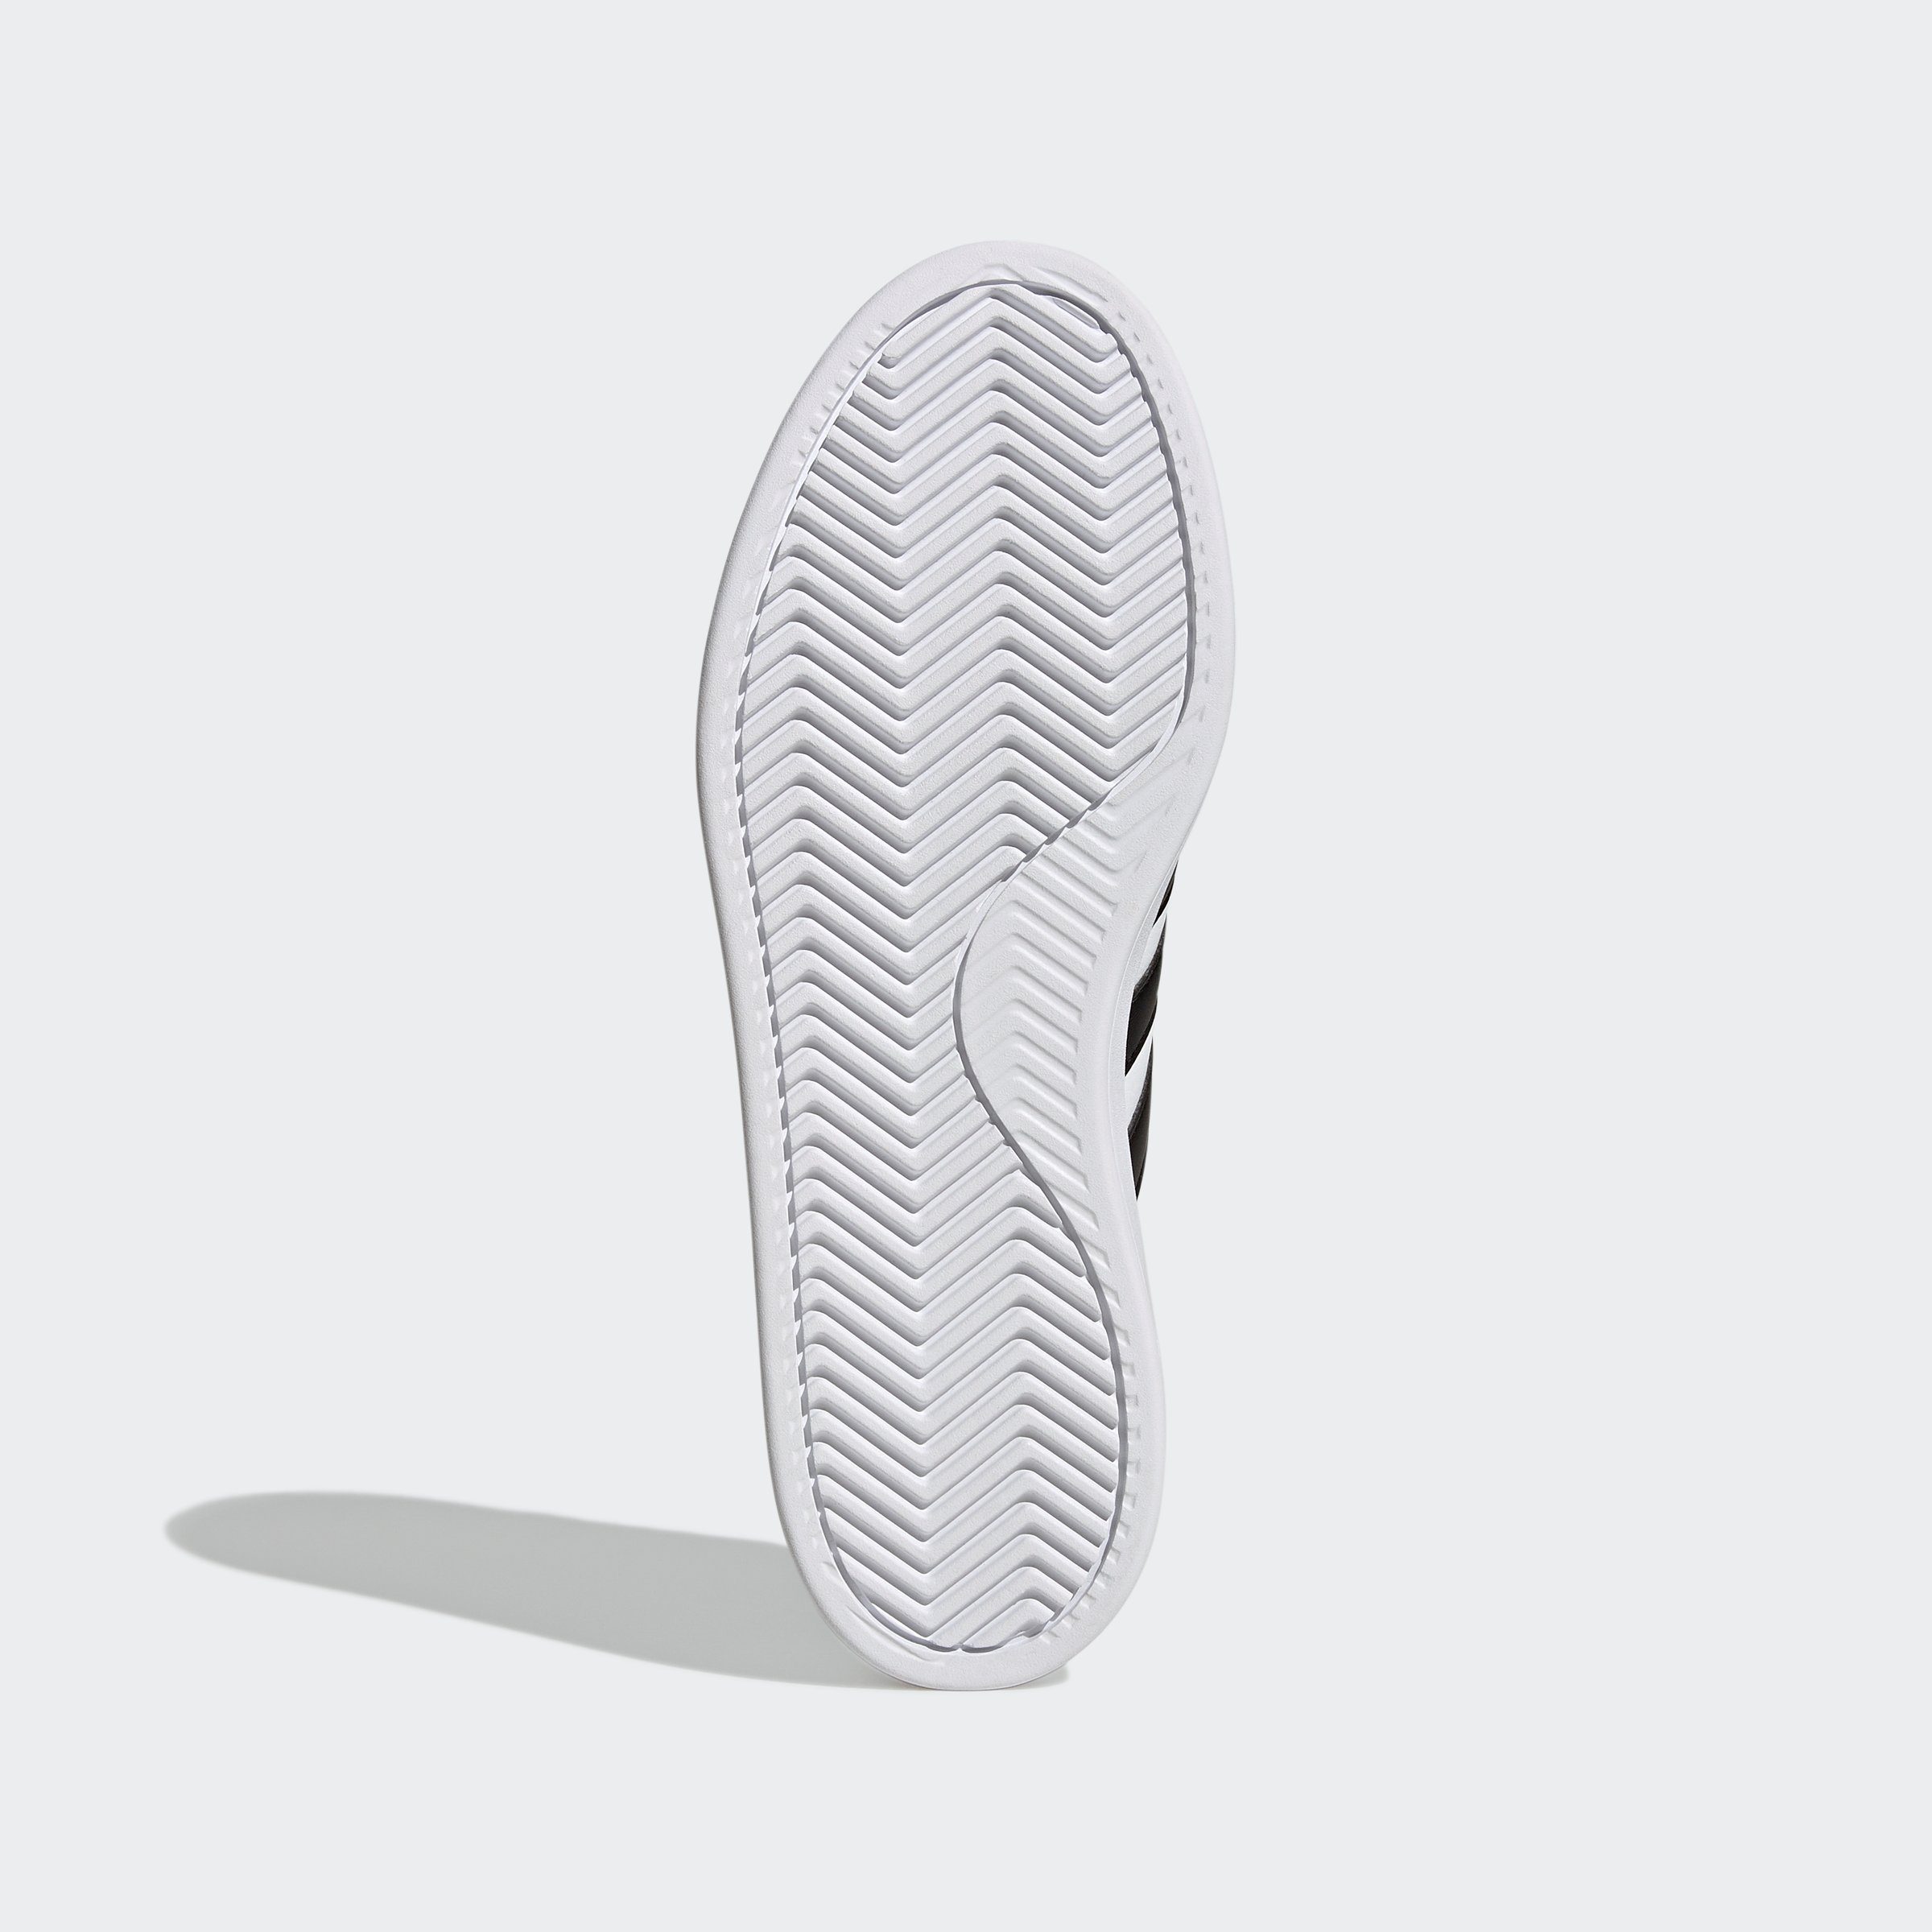 des Cloud Sneaker / COURT den Sportswear Cloud GRAND Superstar auf White Design CLOUDFOAM adidas Core White adidas Black COMFORT / Spuren